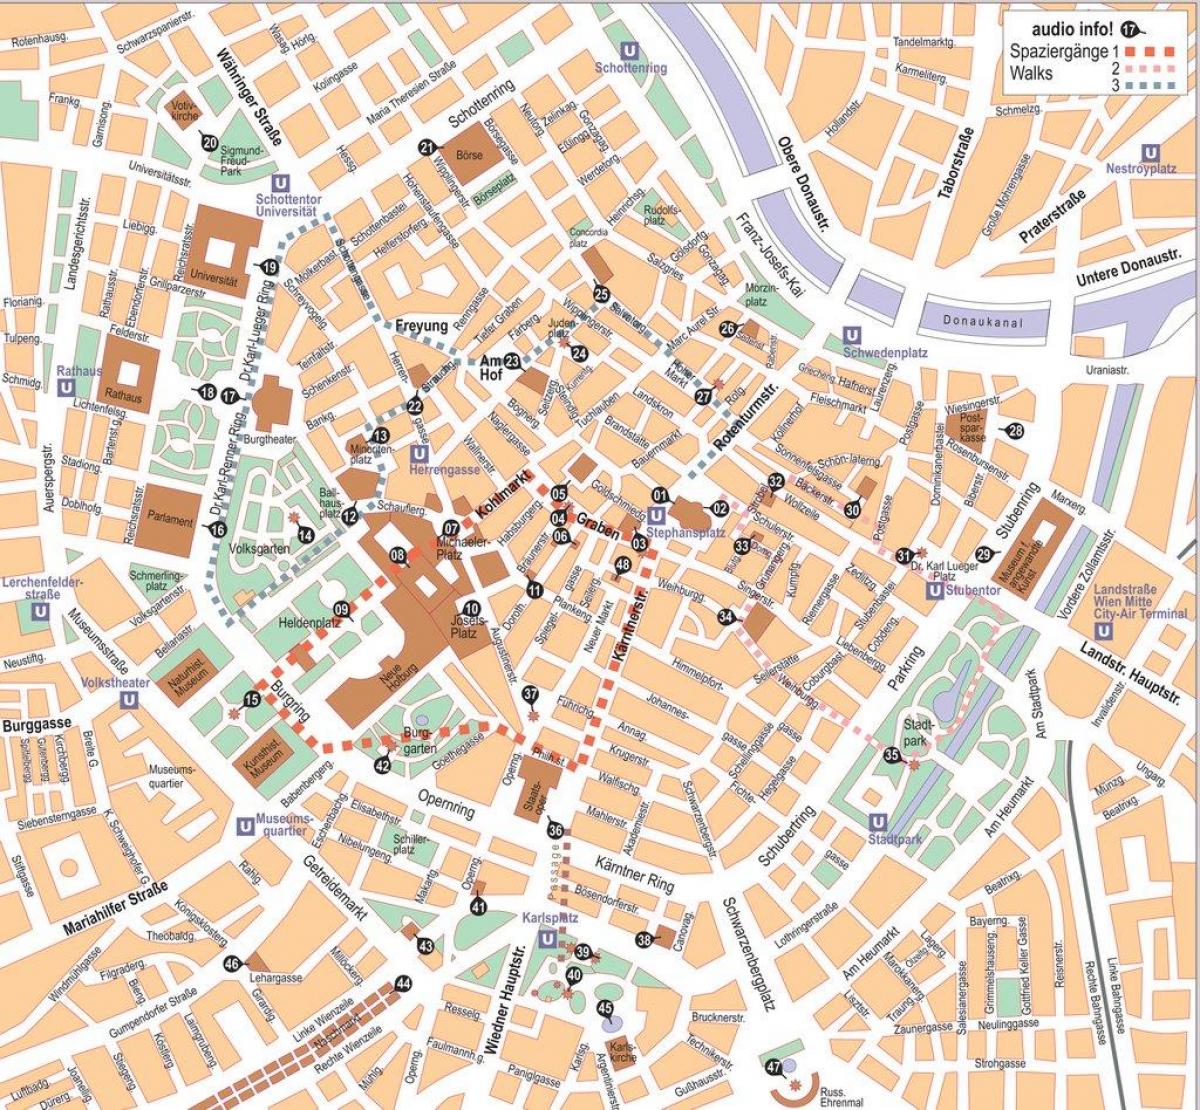 Mapa ng Vienna offline city